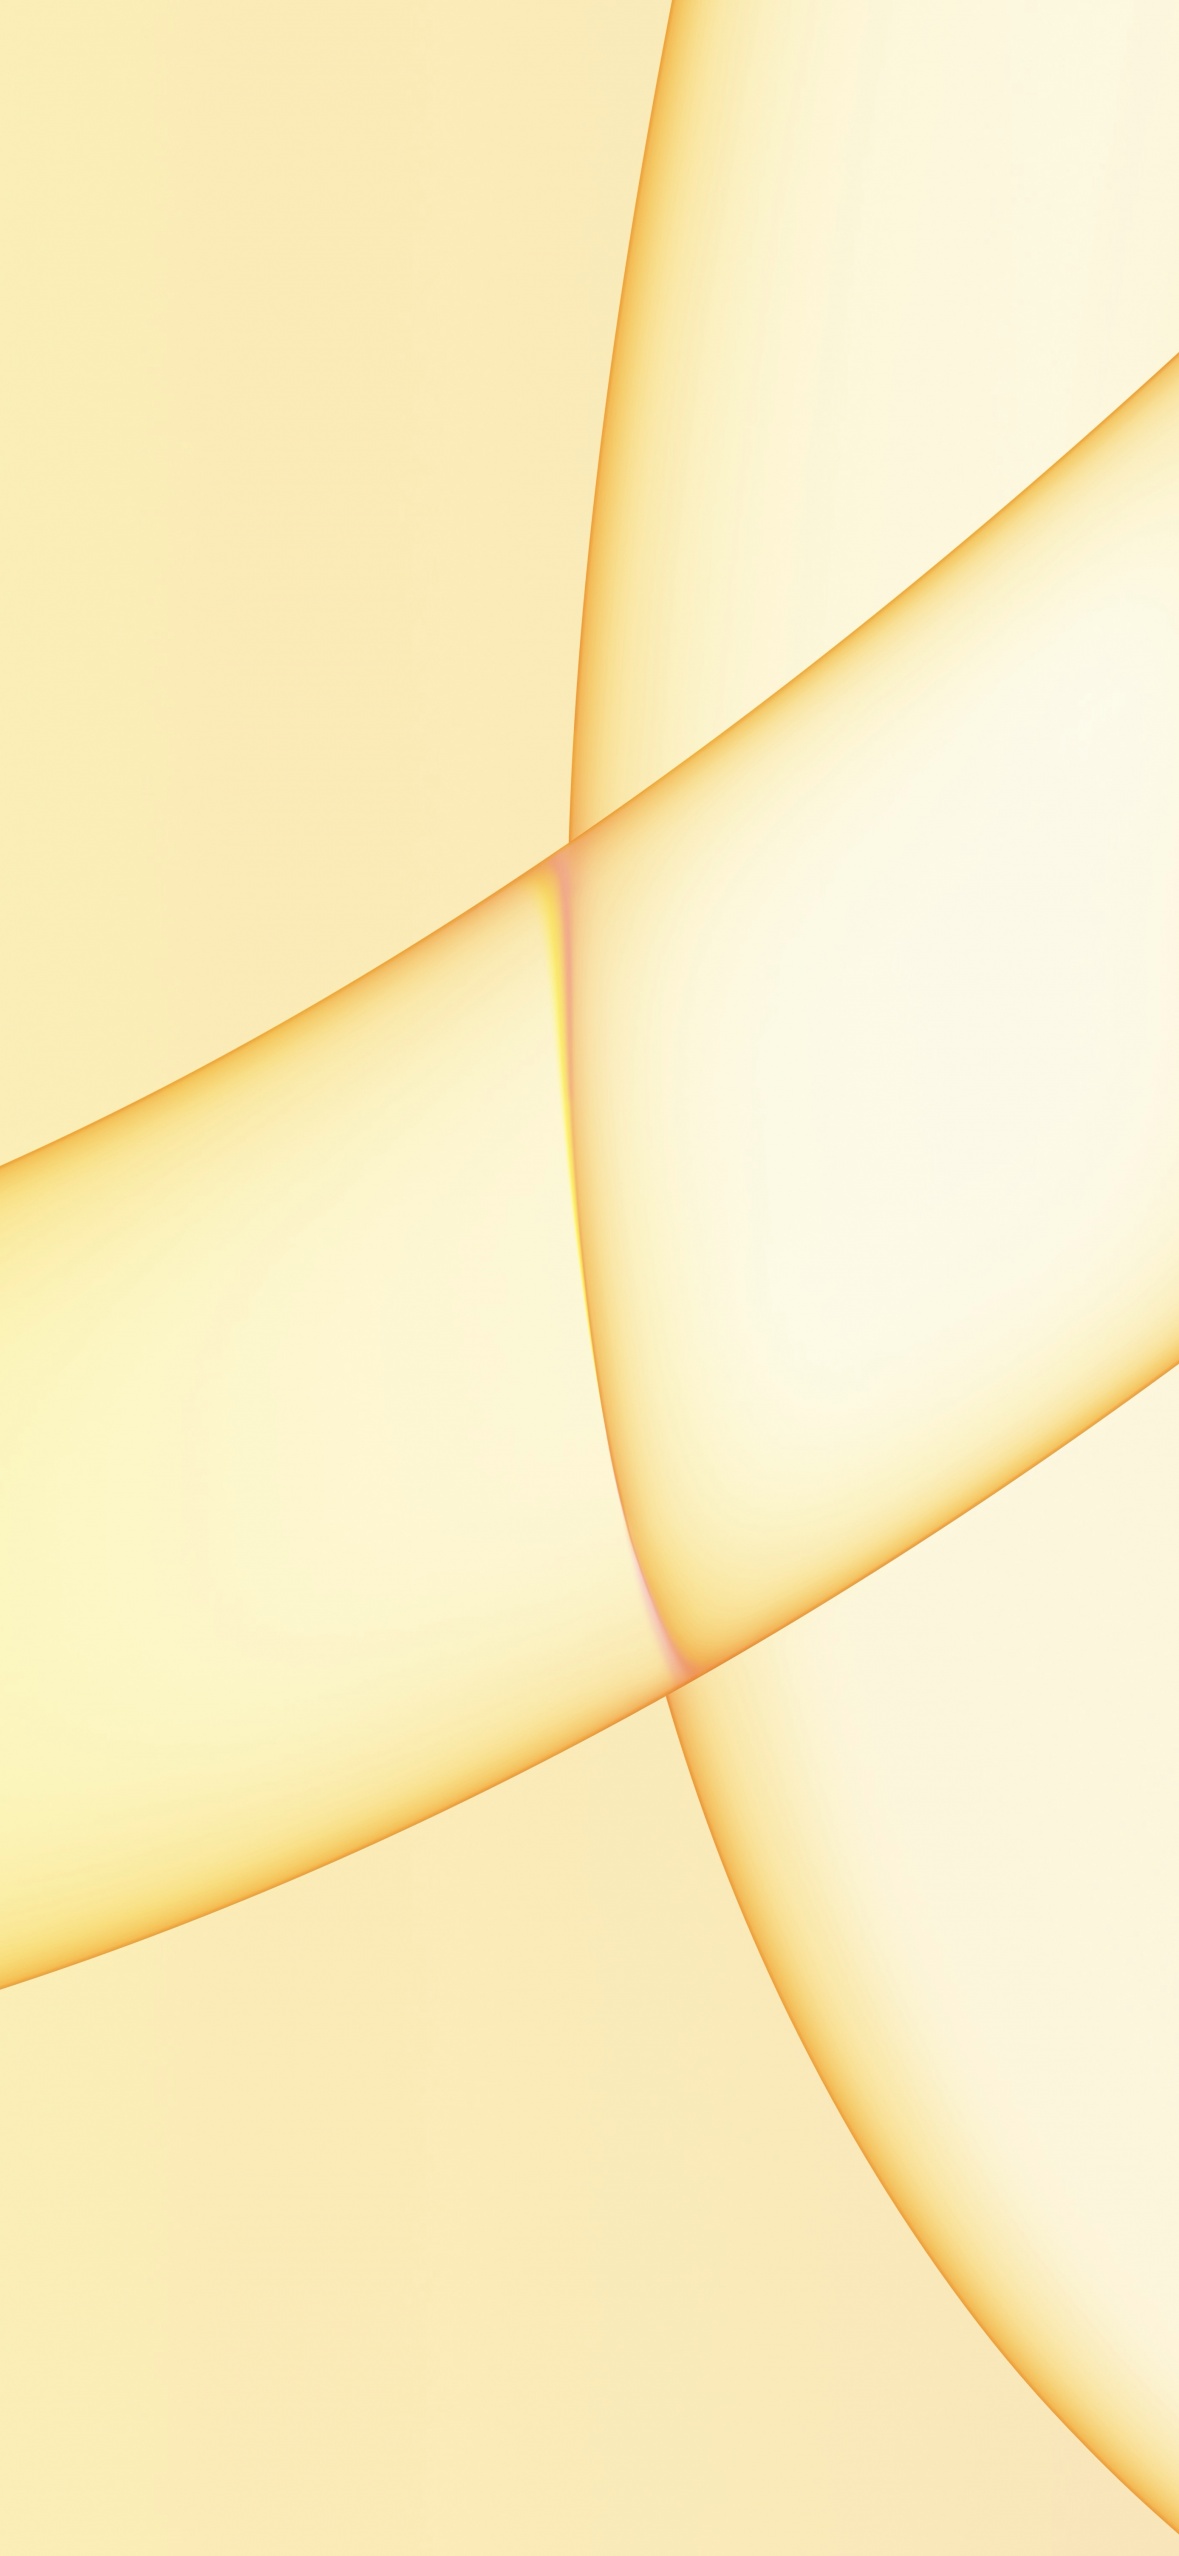 Free Preppy Yellow Wallpaper - Download in Illustrator, EPS, SVG, JPG, PNG  | Template.net